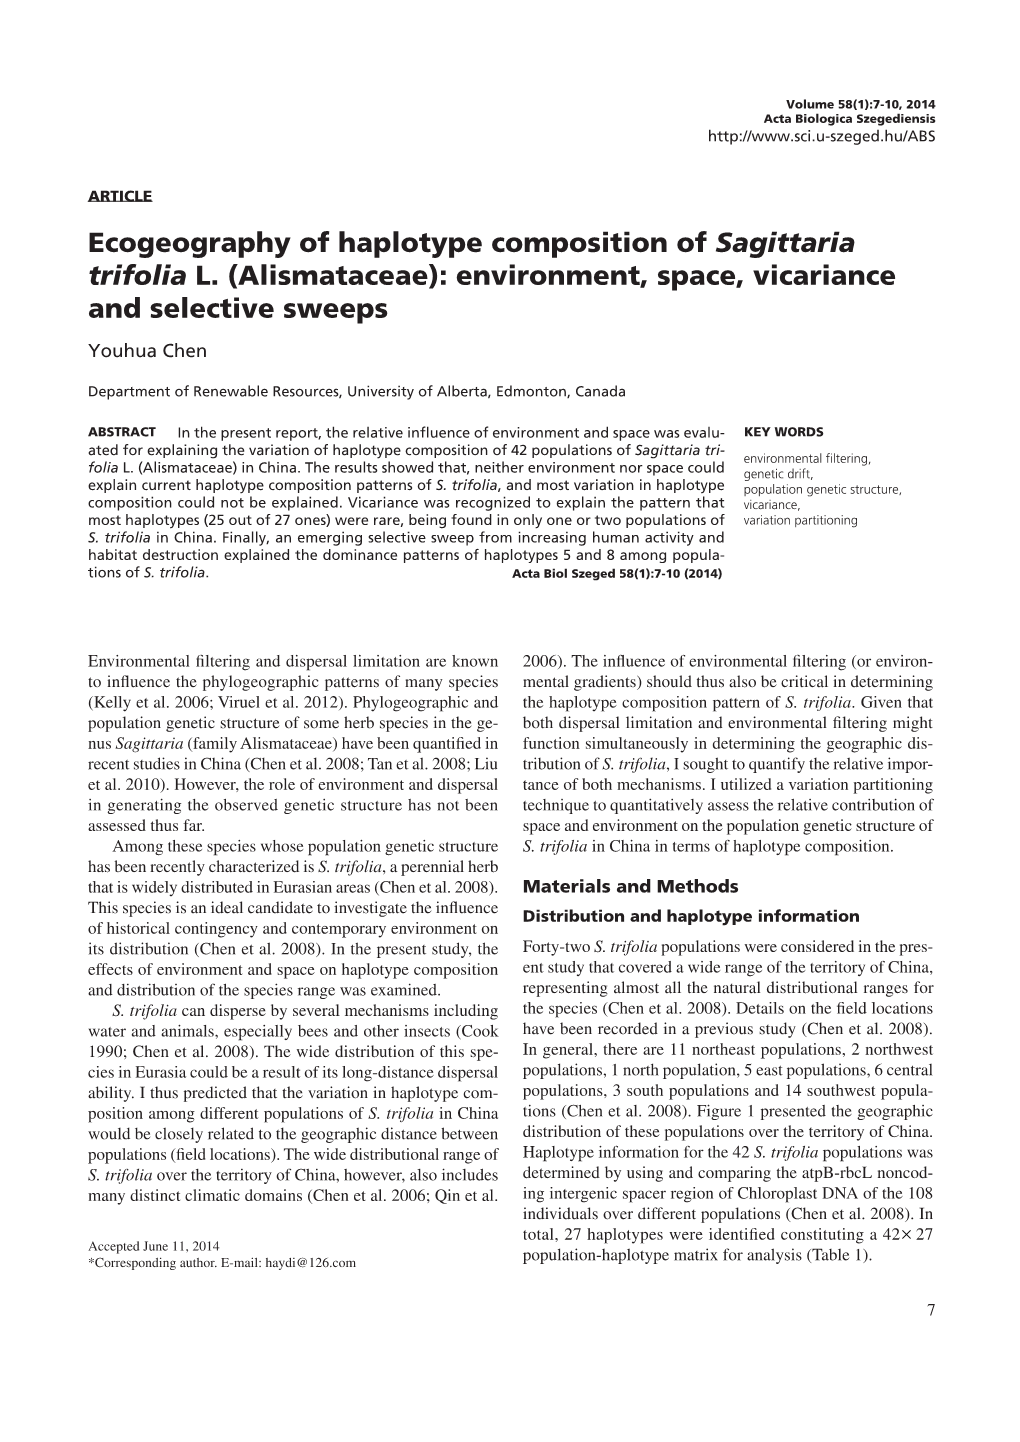 Ecogeography of Haplotype Composition of Sagittaria Trifolia L